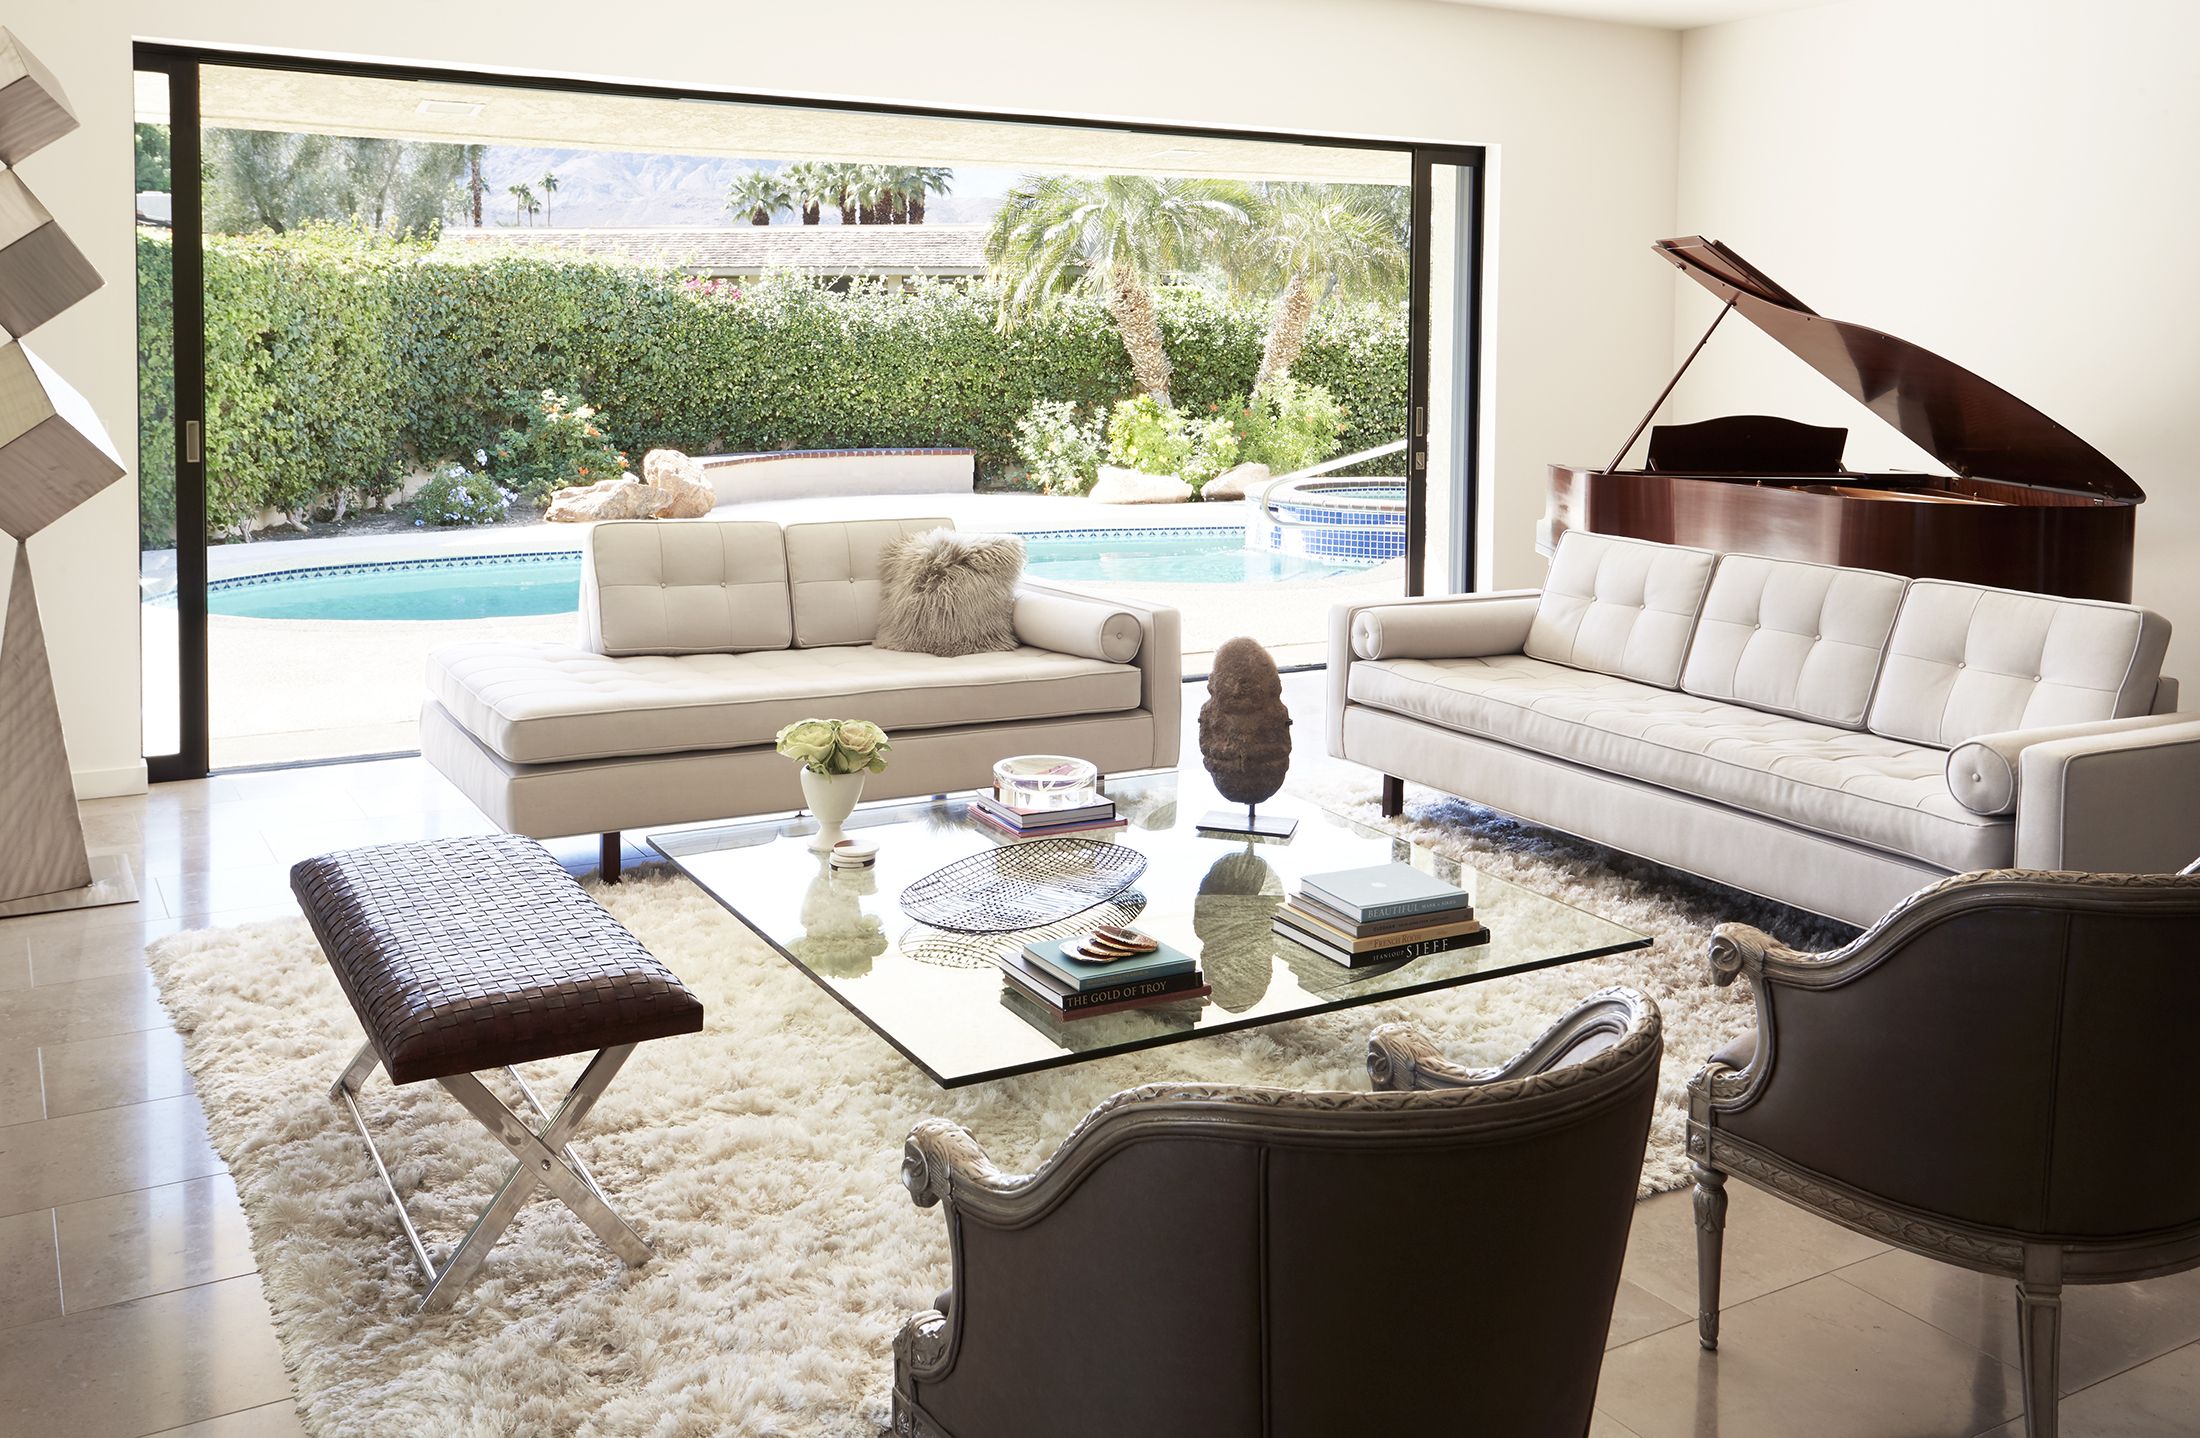 50 Living Room Layout Ideas How To, Living Room Setups